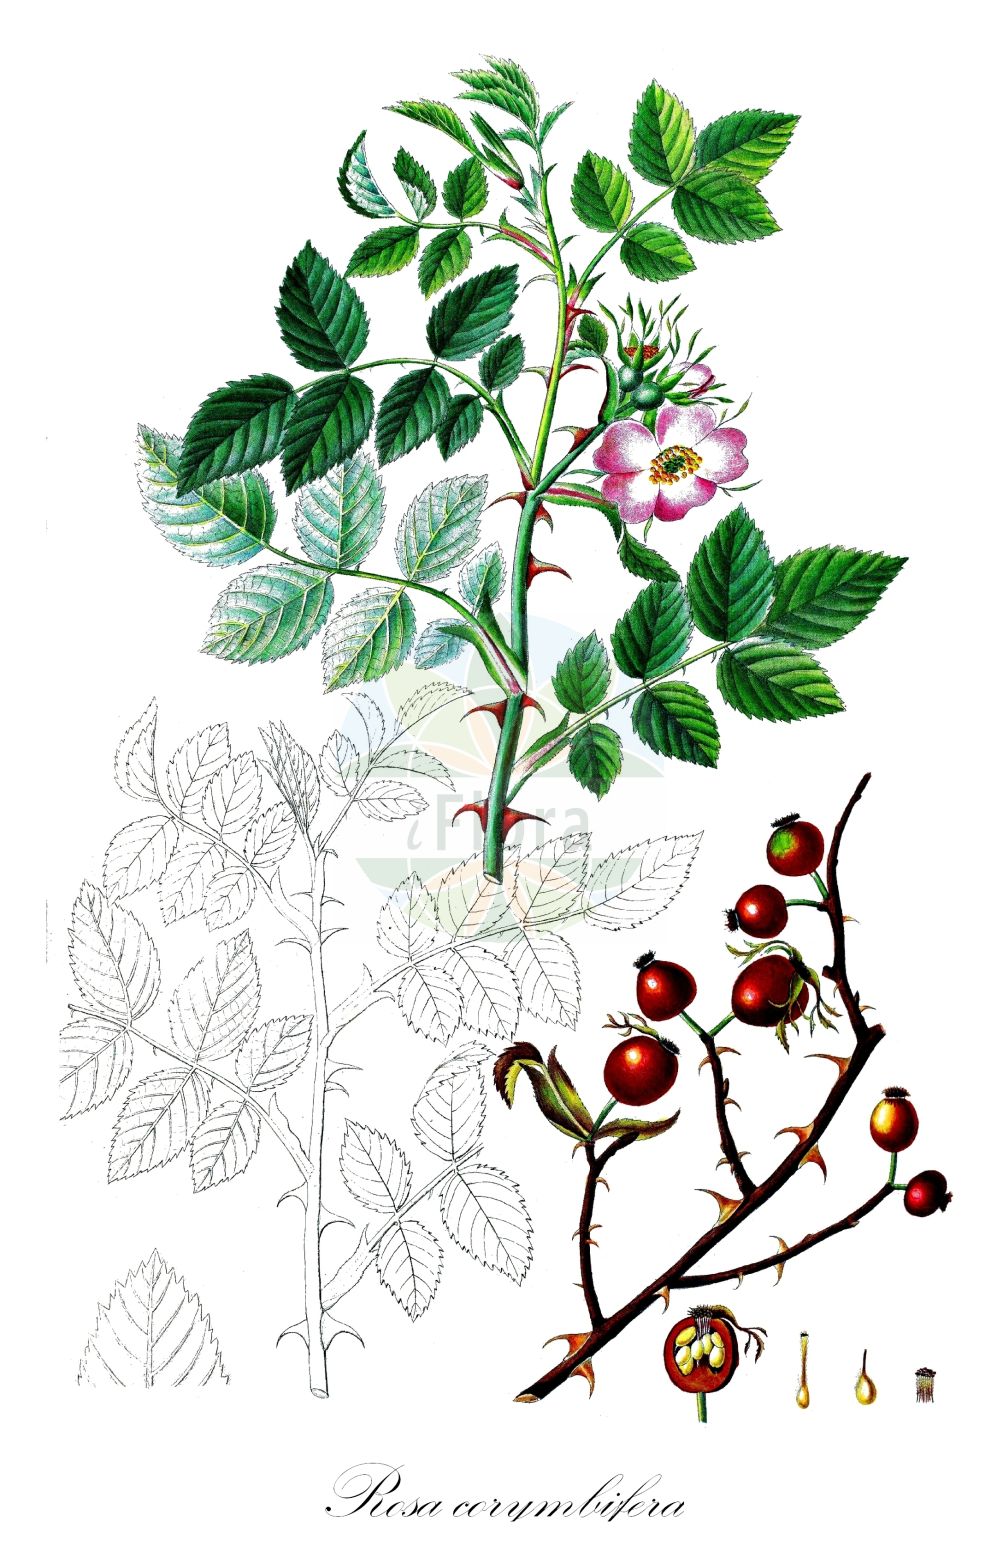 Historische Abbildung von Rosa corymbifera (Hecken-Rose - Round-leaved Dog-Rose). Das Bild zeigt Blatt, Bluete, Frucht und Same. ---- Historical Drawing of Rosa corymbifera (Hecken-Rose - Round-leaved Dog-Rose). The image is showing leaf, flower, fruit and seed.(Rosa corymbifera,Hecken-Rose,Round-leaved Dog-Rose,Crepinia corymbifera,Crepinia obtusifolia,Crepinia platyphylla,Rosa acanthina,Rosa affinita,Rosa amblyphylla,Rosa annoniana,Rosa borysthenica,Rosa brilonensis,Rosa burnatii,Rosa ciesielskii,Rosa cineracens,Rosa cinerosa,Rosa corymbifera,Rosa deseglisei,Rosa dumetorum,Rosa erythrantha,Rosa eulanceolata,Rosa forsteri,Rosa frutetorum,Rosa gabrielis,Rosa globata,Rosa hemitricha,Rosa hillebrandtii,Rosa hirta,Rosa hispidula,Rosa imitata,Rosa incerta,Rosa jactata,Rosa kalmiussica,Rosa kosopoljanskii,Rosa lanceolata,Rosa lapidosa,Rosa obscura,Rosa obtusifolia,Rosa opaca,Rosa platyphylla,Rosa pyriformis,Rosa rammiorum,Rosa richteri,Rosa rivularis,Rosa schmalhauseniana,Rosa semiglabra,Rosa solstitialis,Rosa sphaerocarpa,Rosa spinetorum,Rosa taurica,Rosa tesquicola,Rosa tortuosa,Rosa trichoidea,Rosa uncinella,Rosa uncinelloides,Rosa urbica,Rosa vaulxiana,Rosa wittmannii,Hecken-Rose,Busch-Rose,Gewoehnliche Hecken-Rose,Round-leaved Dog-Rose,Glaucous Dog Rose,Rosa,Rose,Rose,Rosaceae,Rosengewächse,Rose family,Blatt,Bluete,Frucht,Same,leaf,flower,fruit,seed,Oeder (1761-1883))